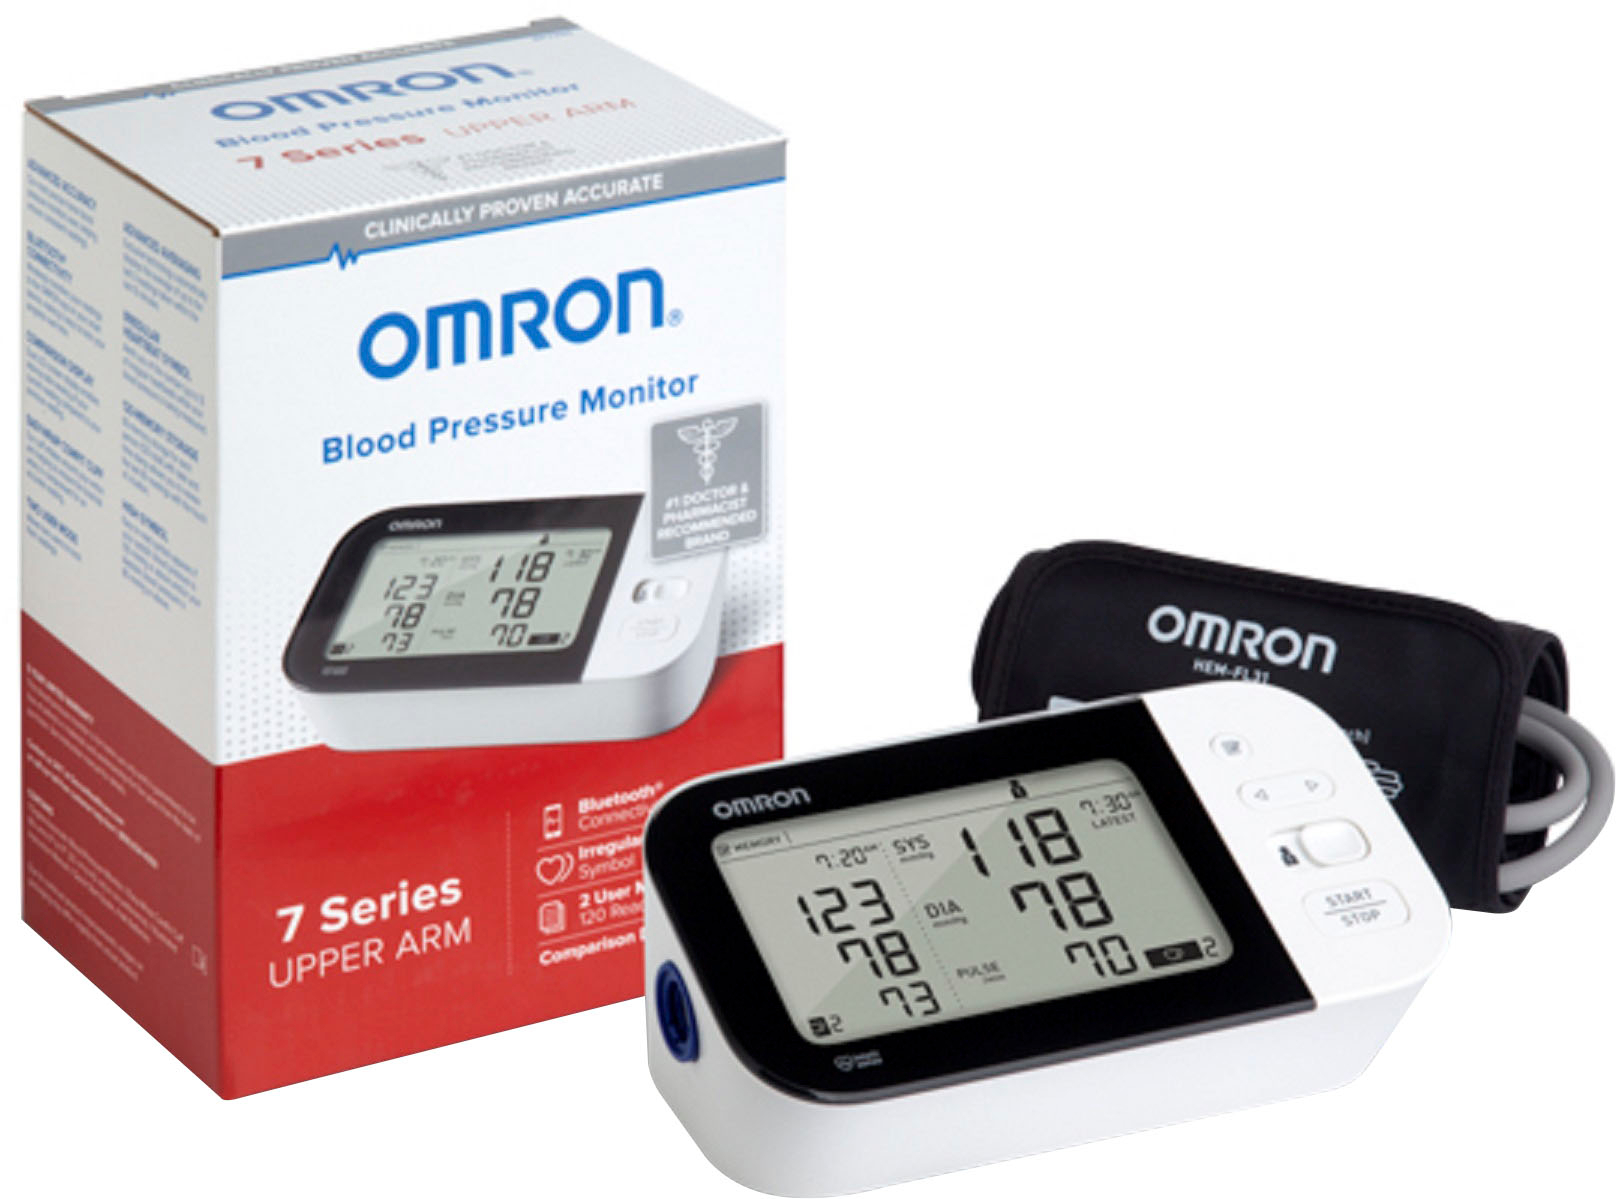 Best Buy: iHealth Wireless Blood Pressure Wrist Monitor White BP7